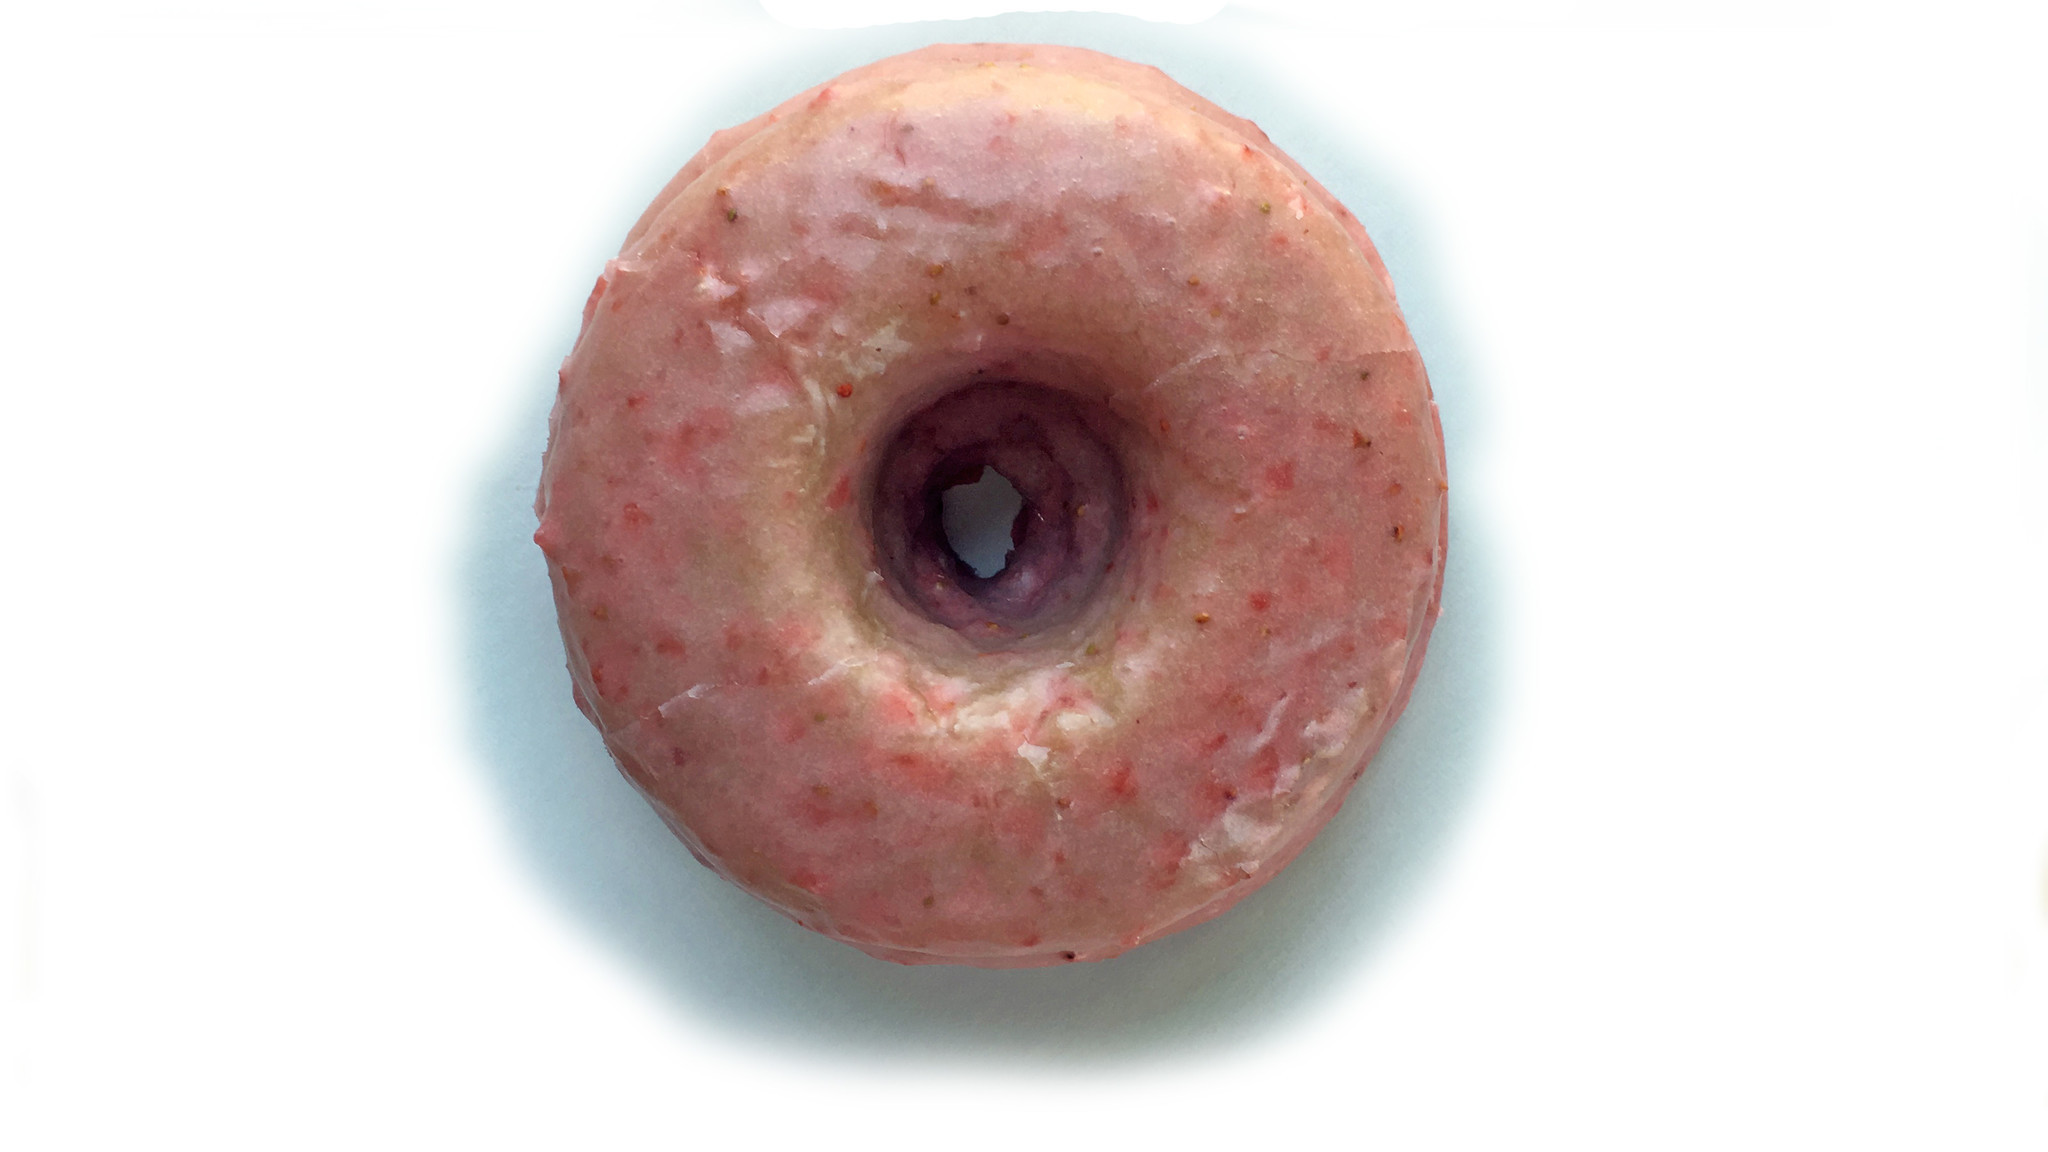 Strawberry buttermilk doughnut from Fonuts.